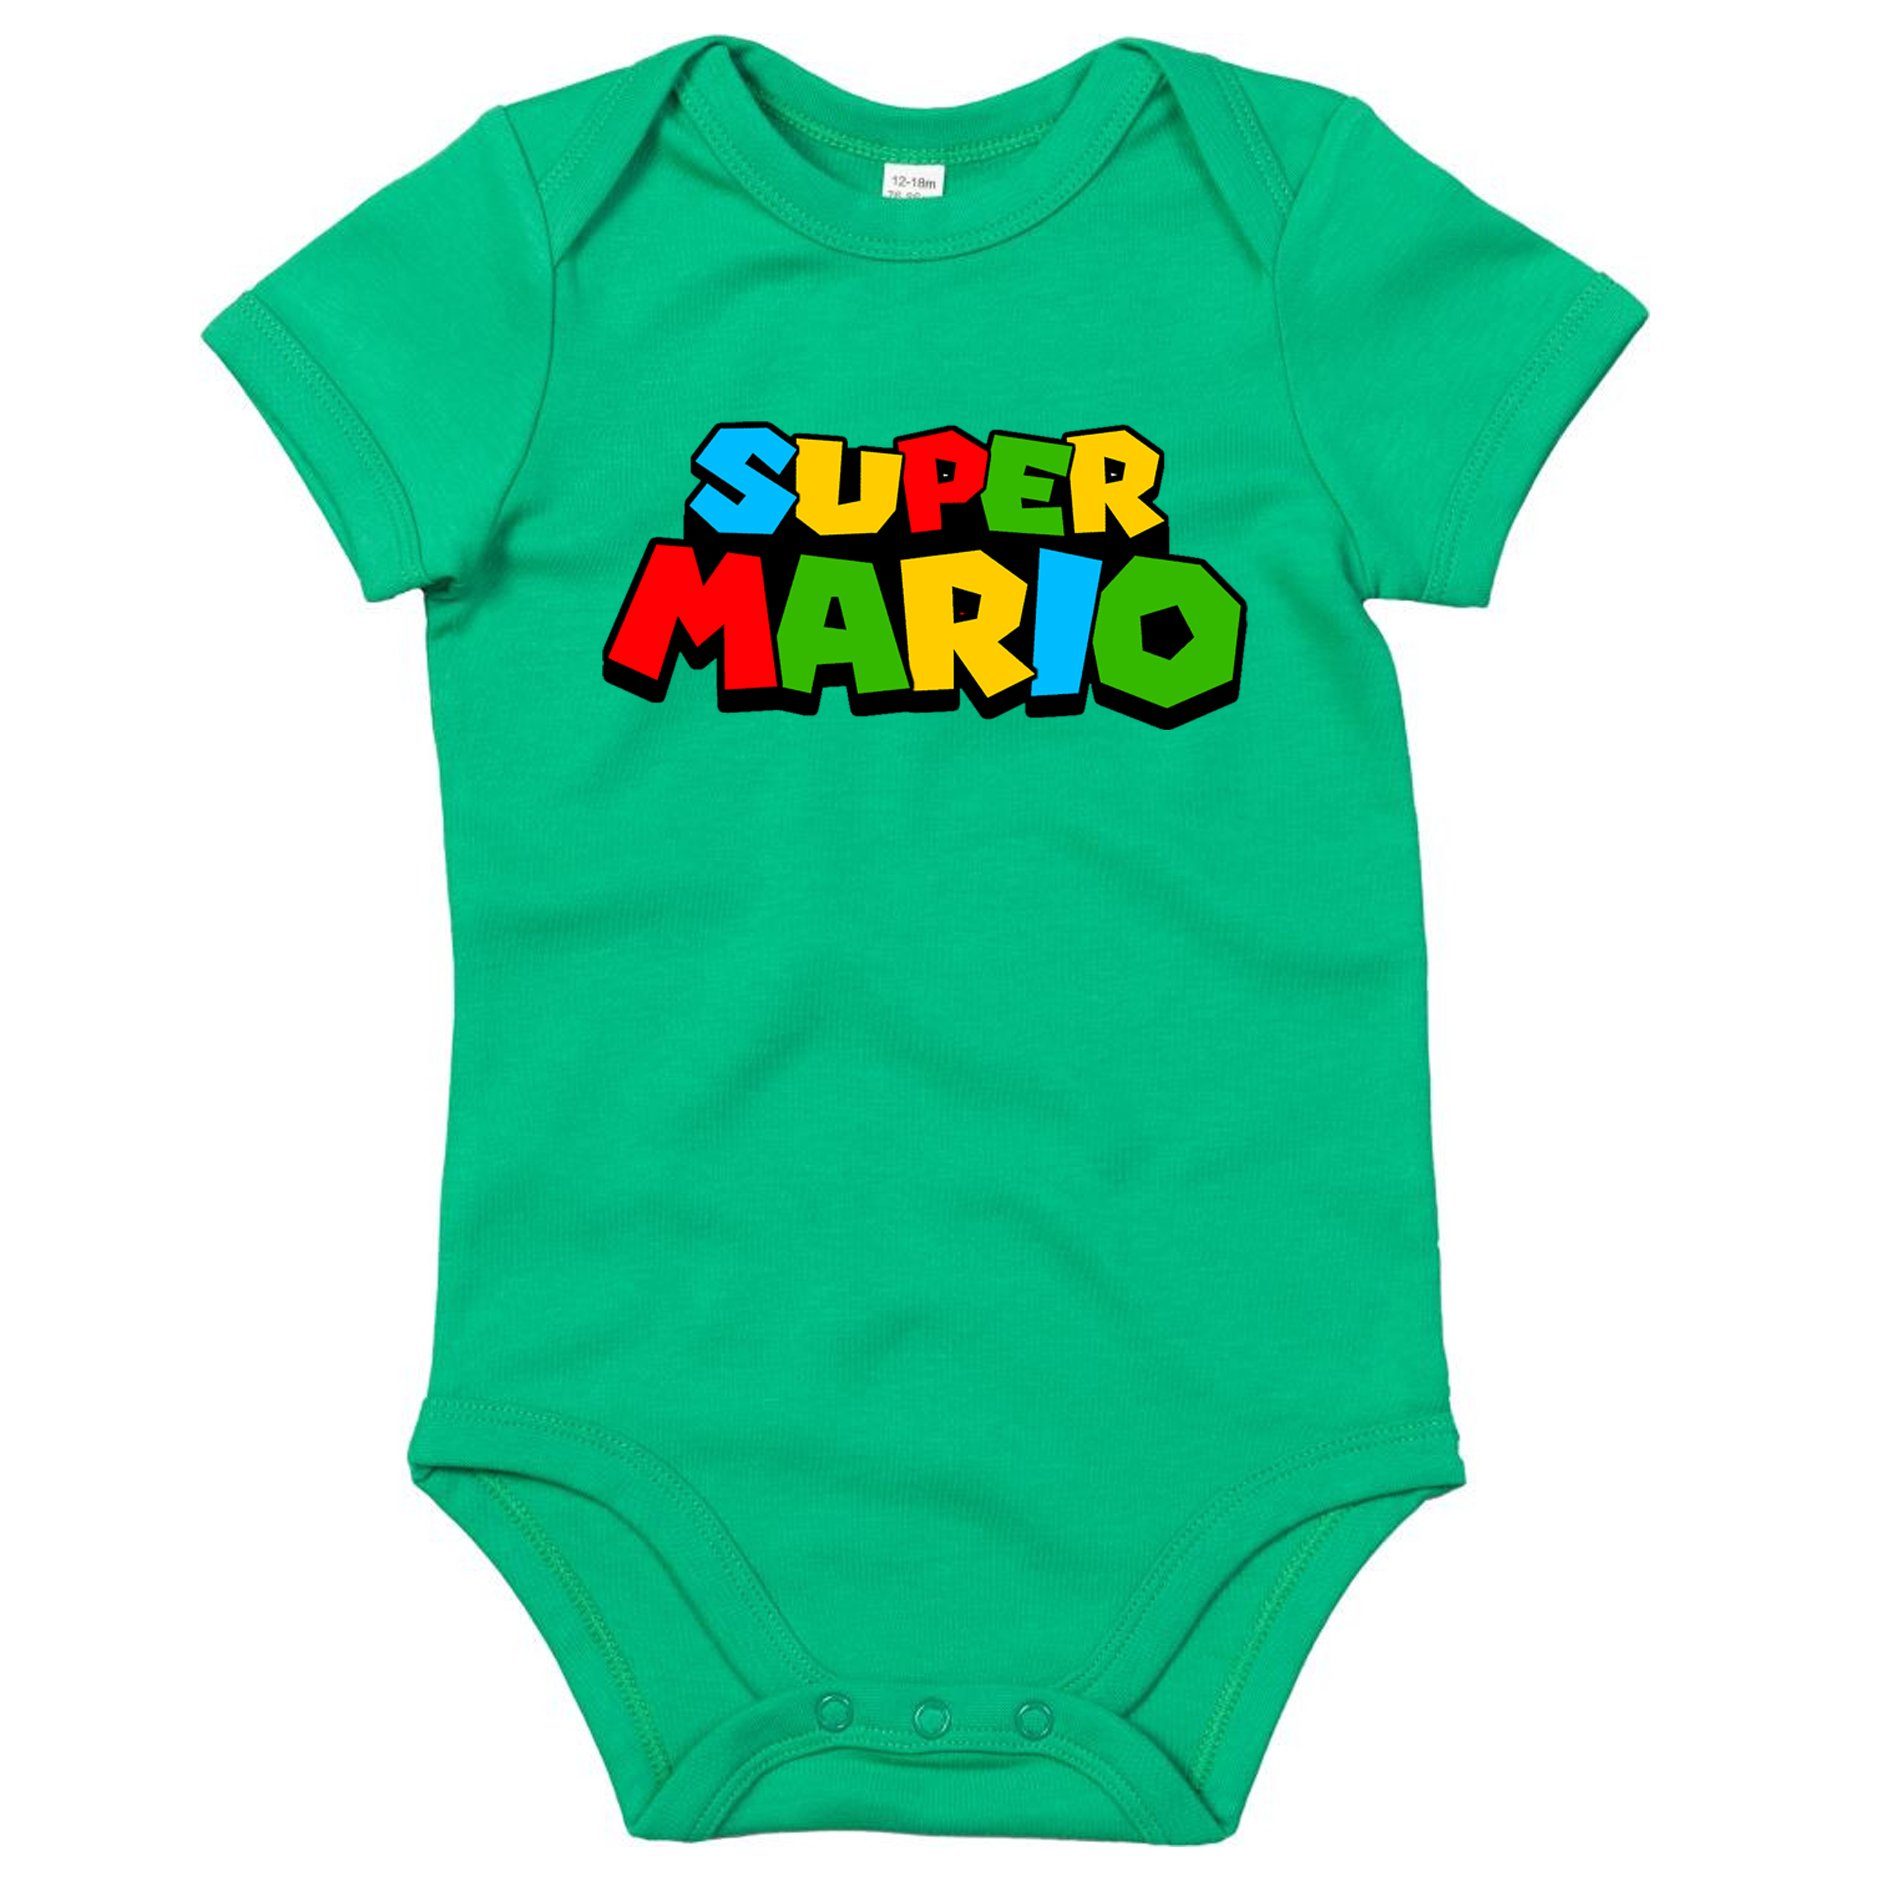 Blondie & Brownie Strampler Kinder Baby Super Mario Nintendo Gamer Gaming Konsole Spiele Grün